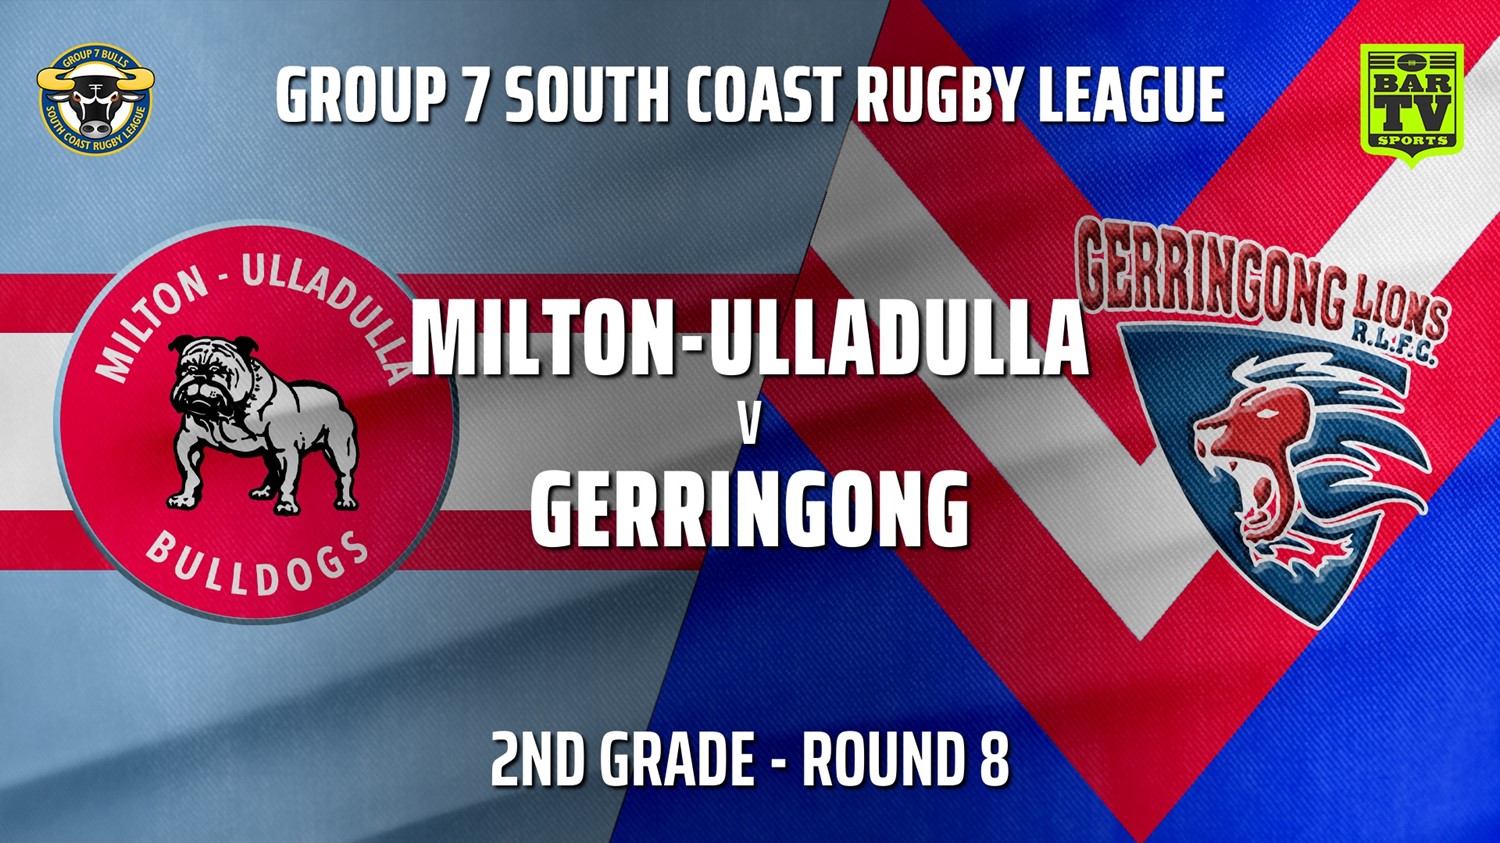 210606-Group 7 RL Round 8 - 2nd Grade - Milton-Ulladulla Bulldogs v Gerringong Slate Image